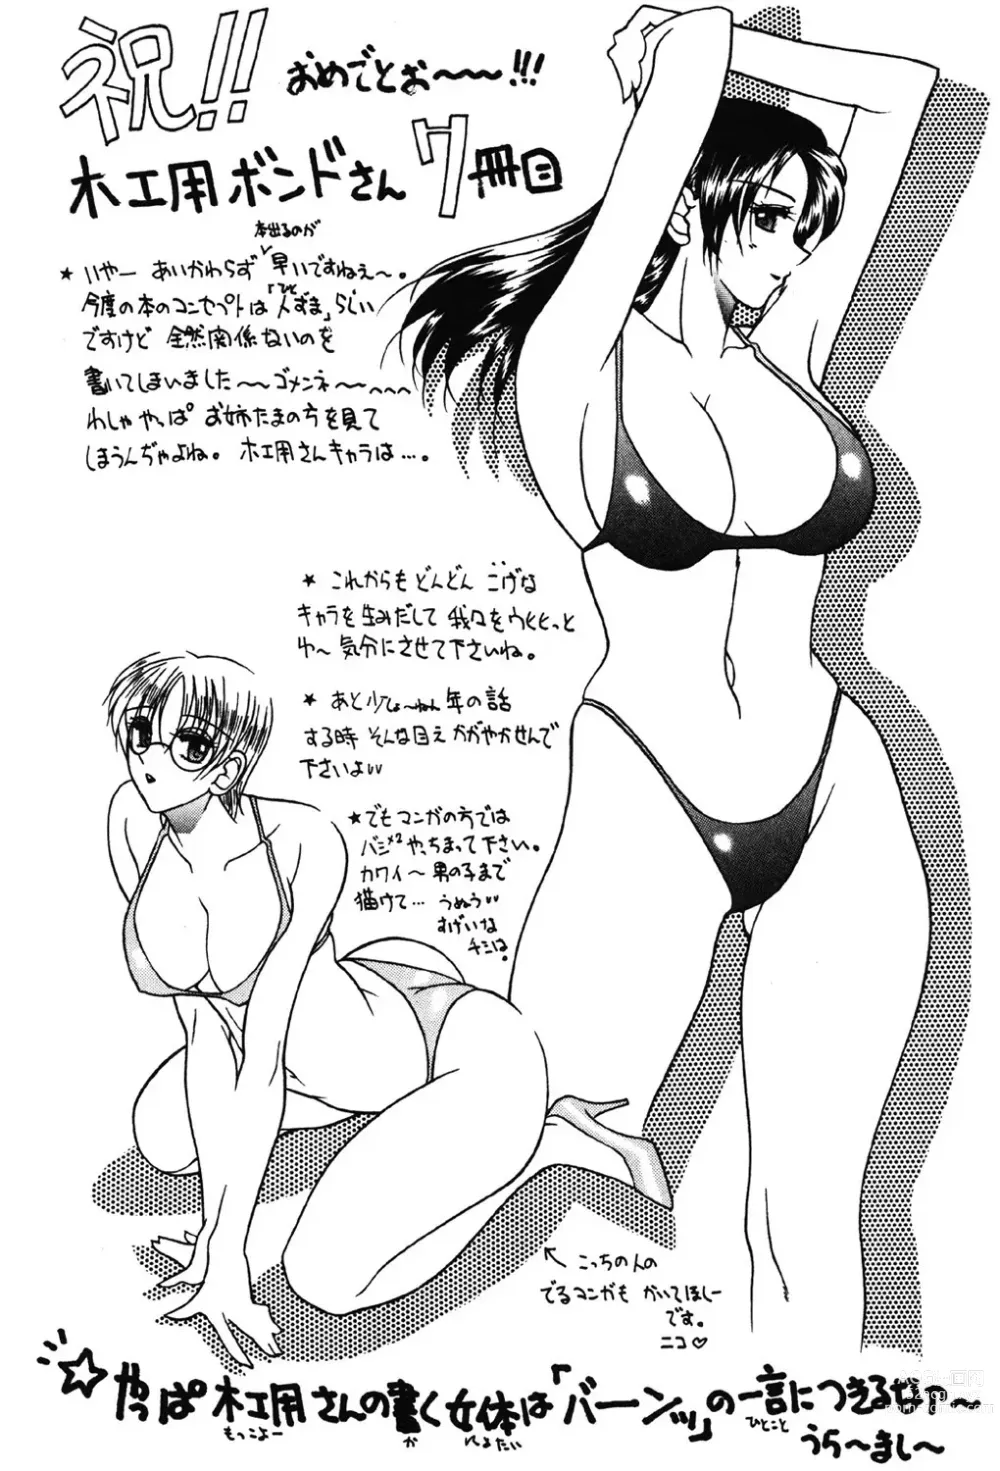 Page 144 of manga Hahaoya Ga Onna Ni Naru Toki